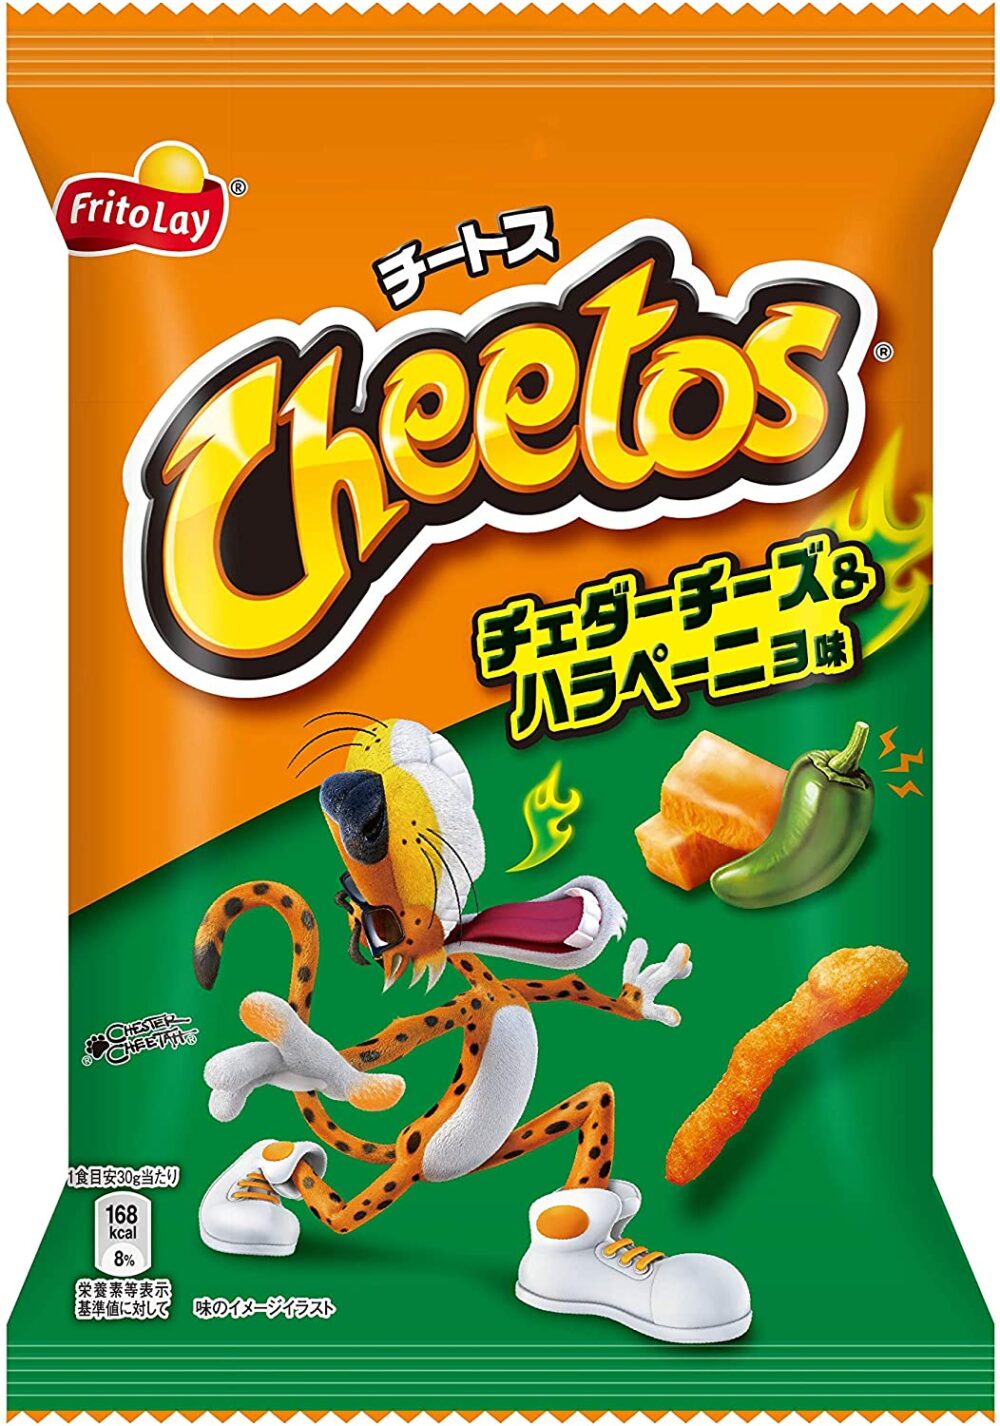 Nendo Addicts - Fritolay - Cheetos Cheese And Chili Jalapeno